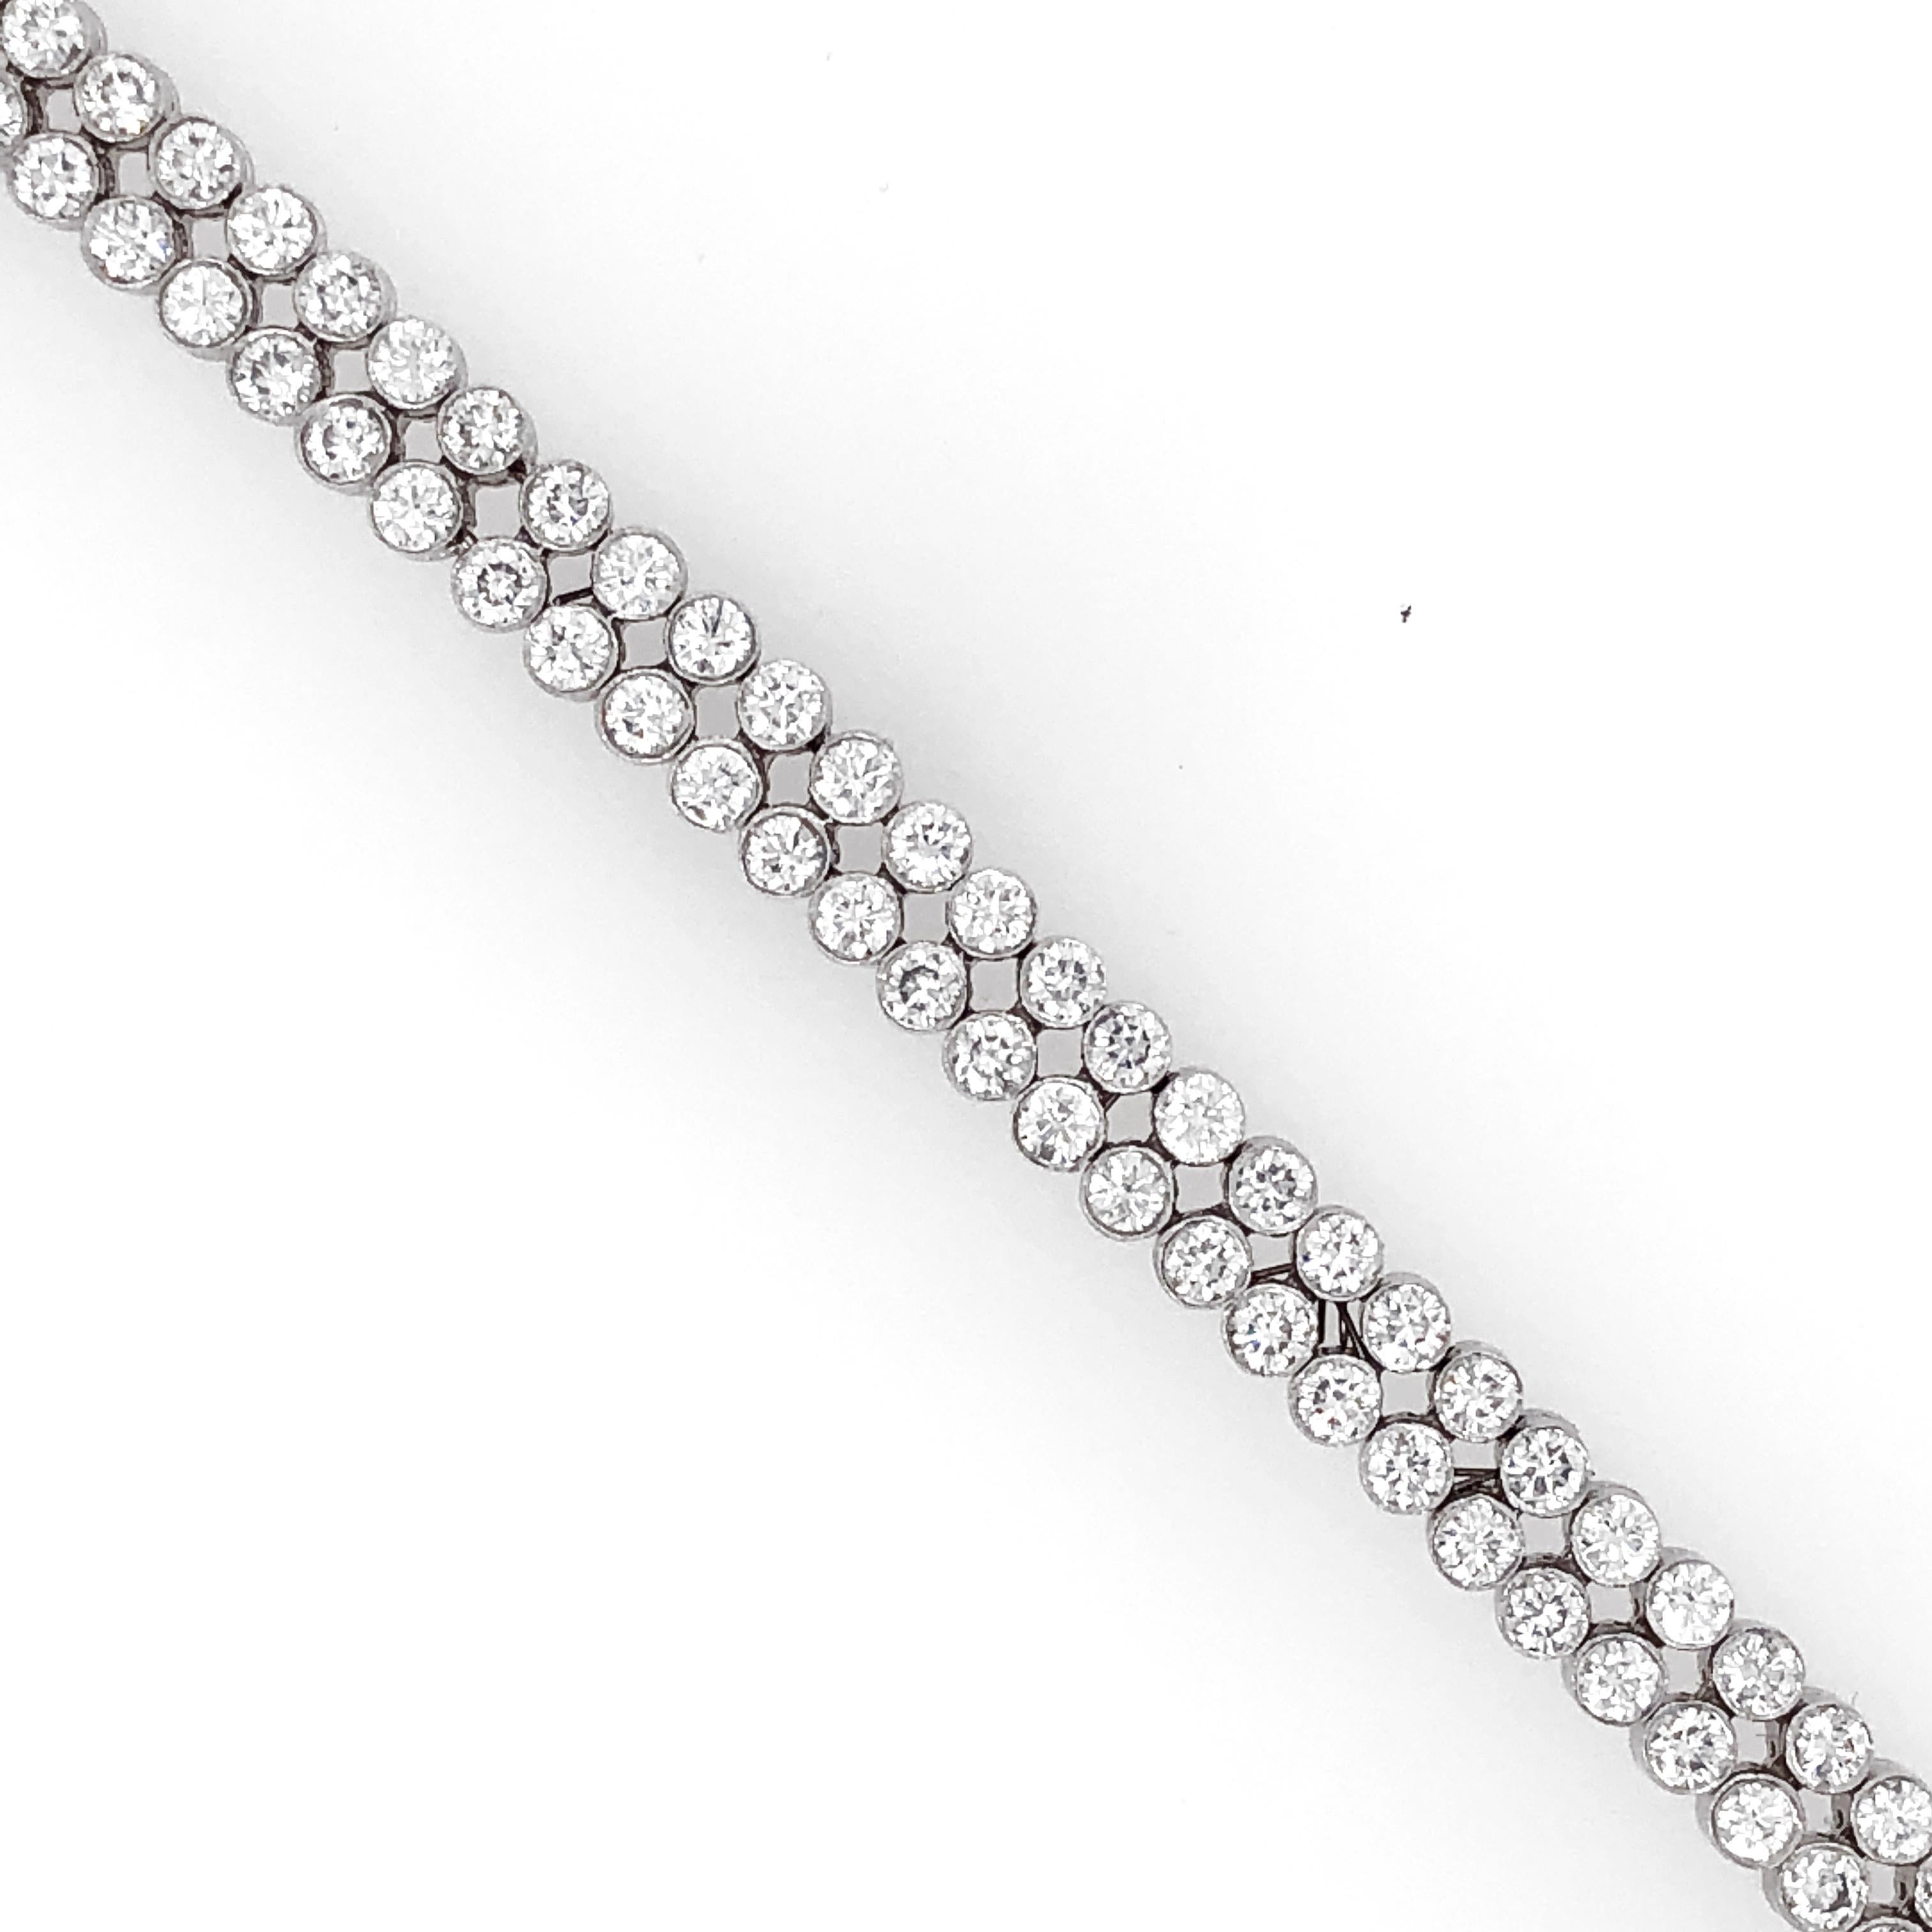 Elegantly slim dual row tennis bracelet.
Platinum 950 bracelet.
Round white natural diamonds 8.59 ct.
Diamonds in G-H Color Clarity VS.
Length: 17.5 cm
Width: 0.6 cm
Weight: 34.6 g